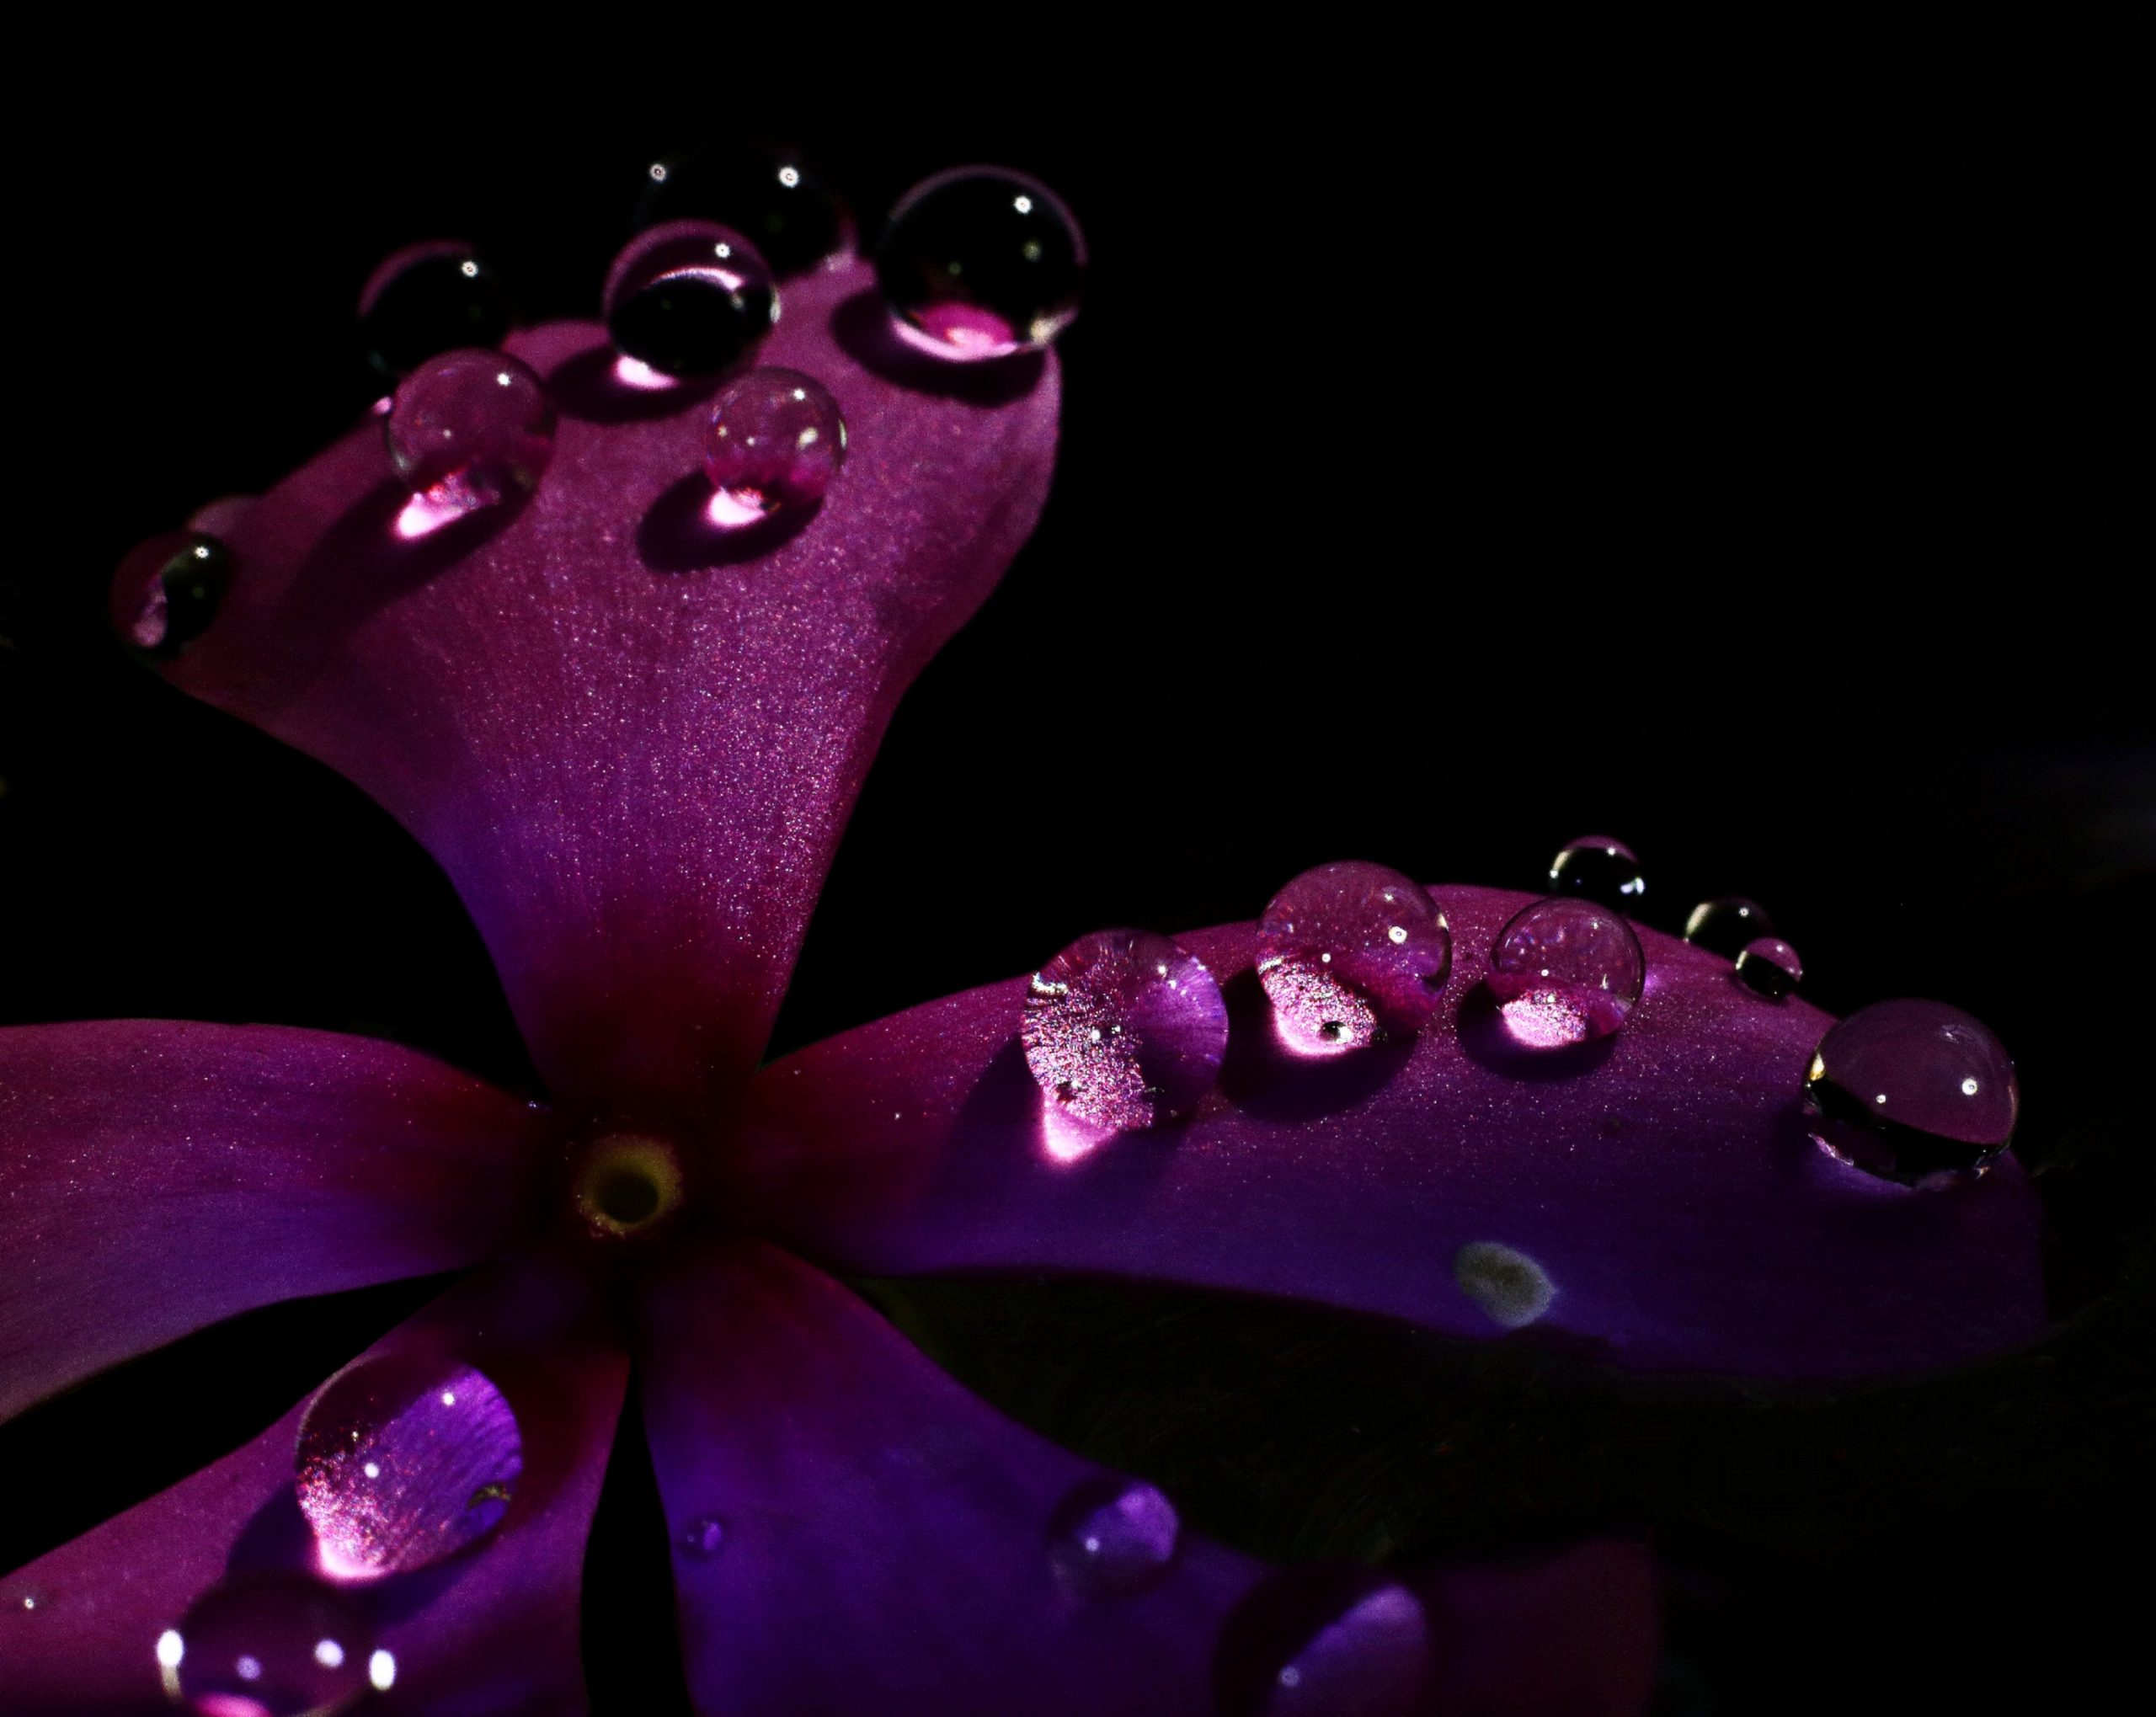 Water drops on flower petals